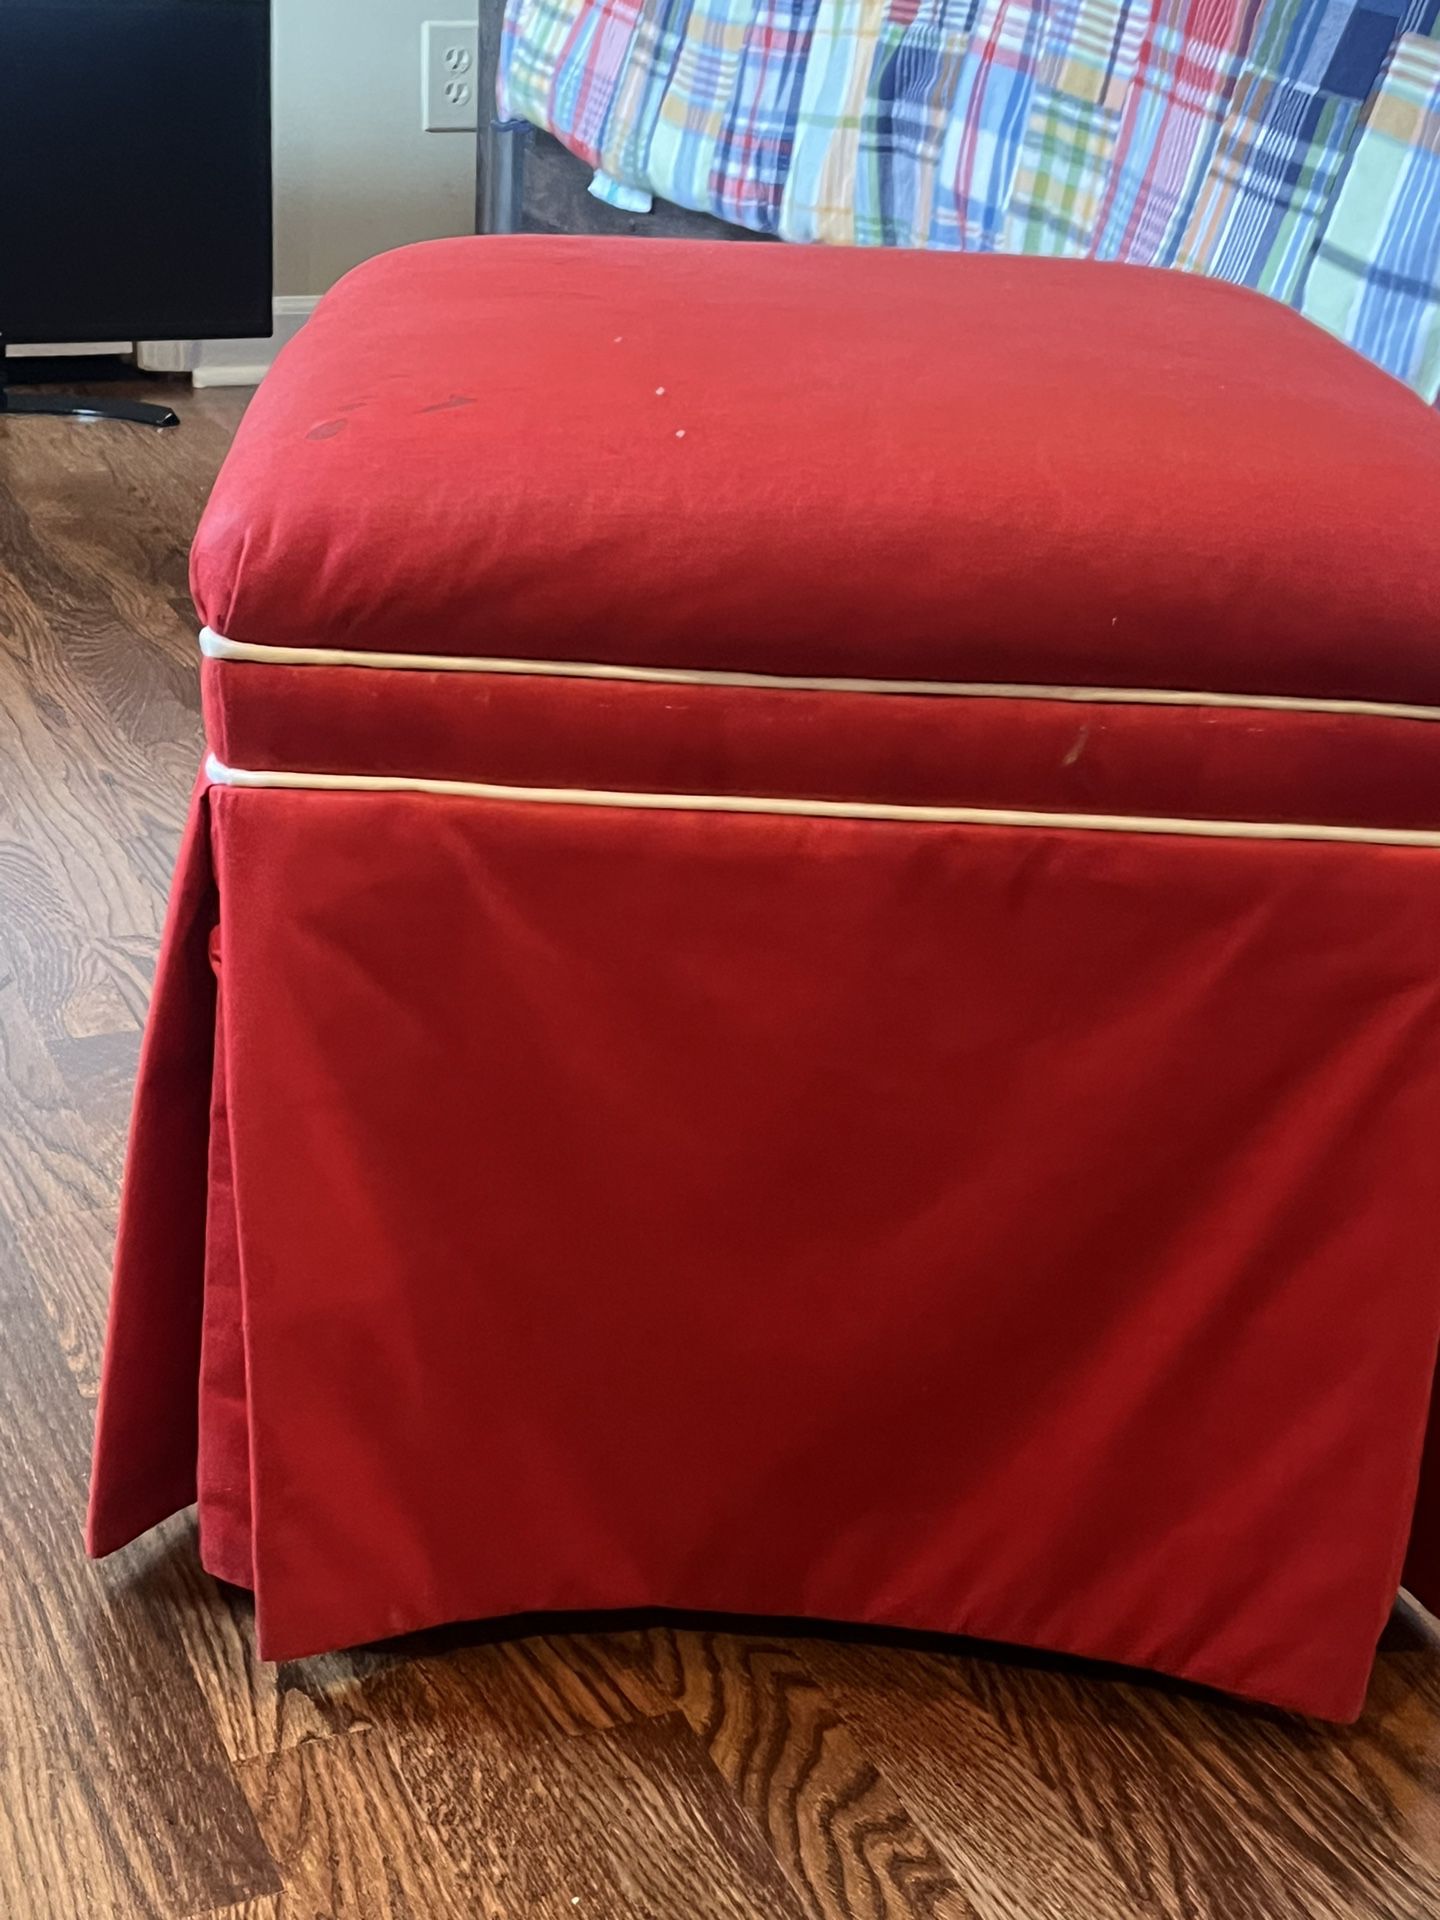 red stool/ottoman